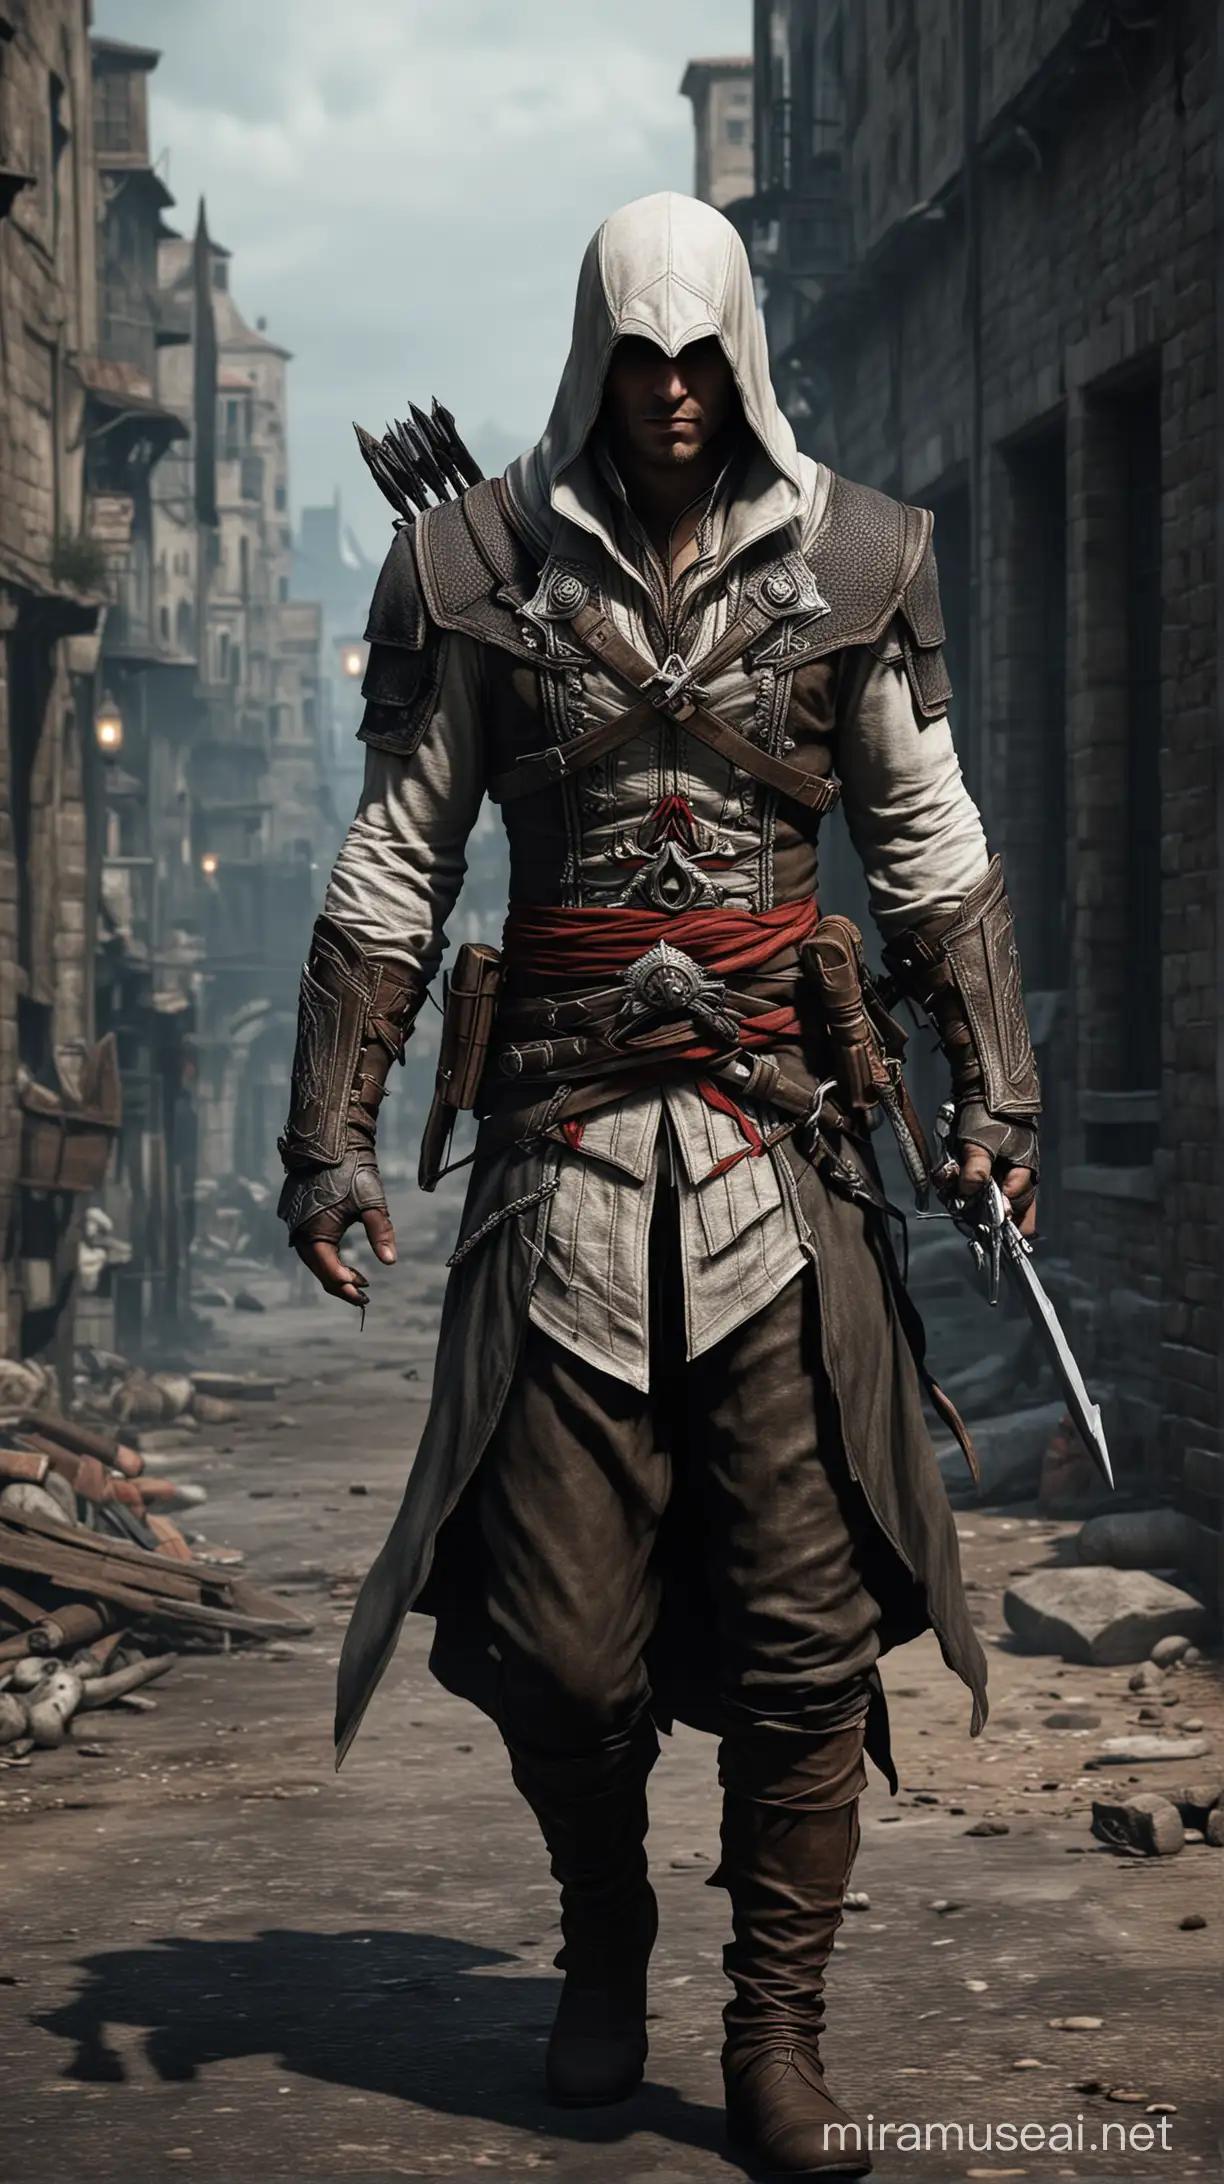 Assassin's creed, dark , realistic